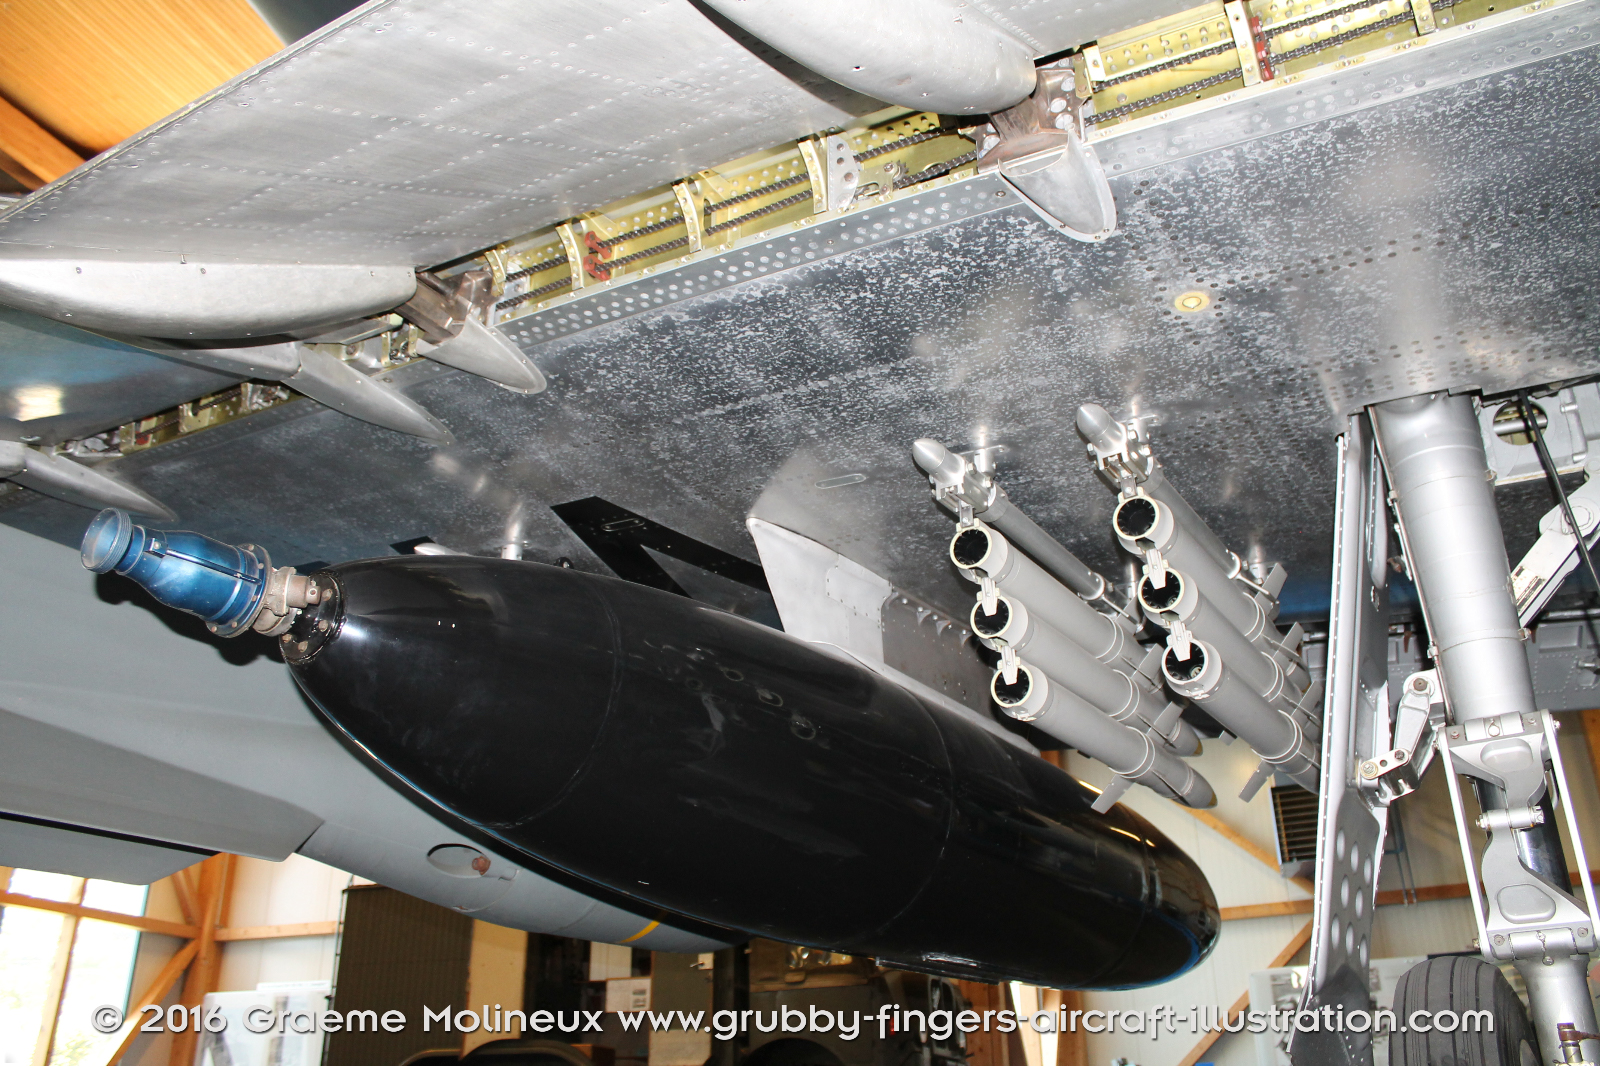 FFA_P-16_X-HB-VAD_Swiss_Air_Force_Museum_2015_51_GrubbyFingers